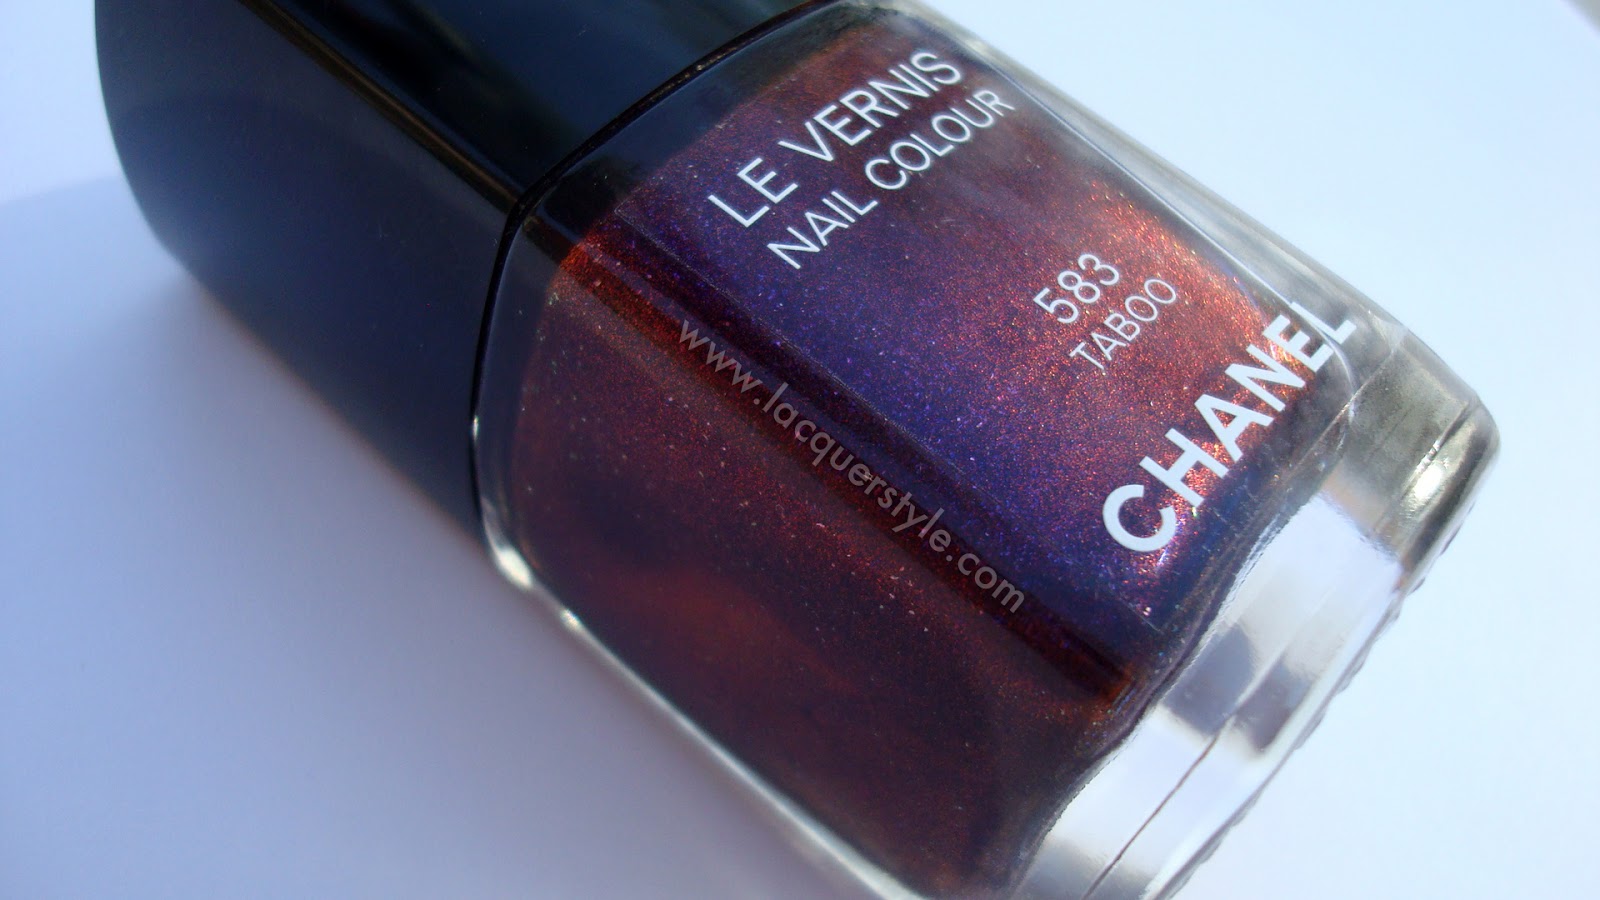 chanel black cherry nail polish